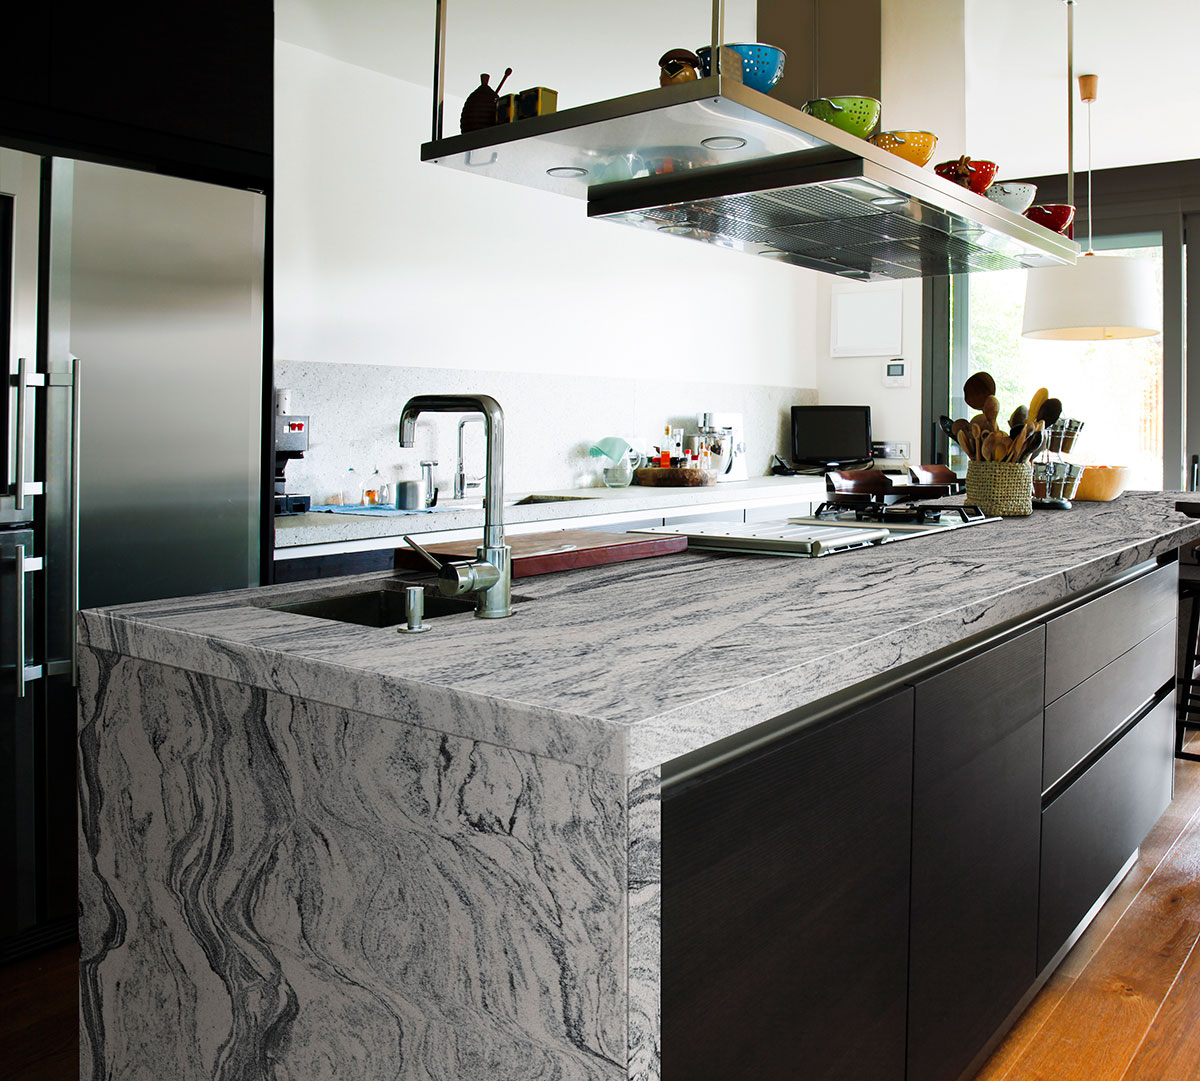  Silver Cloud Granite Countertop in Kitchen